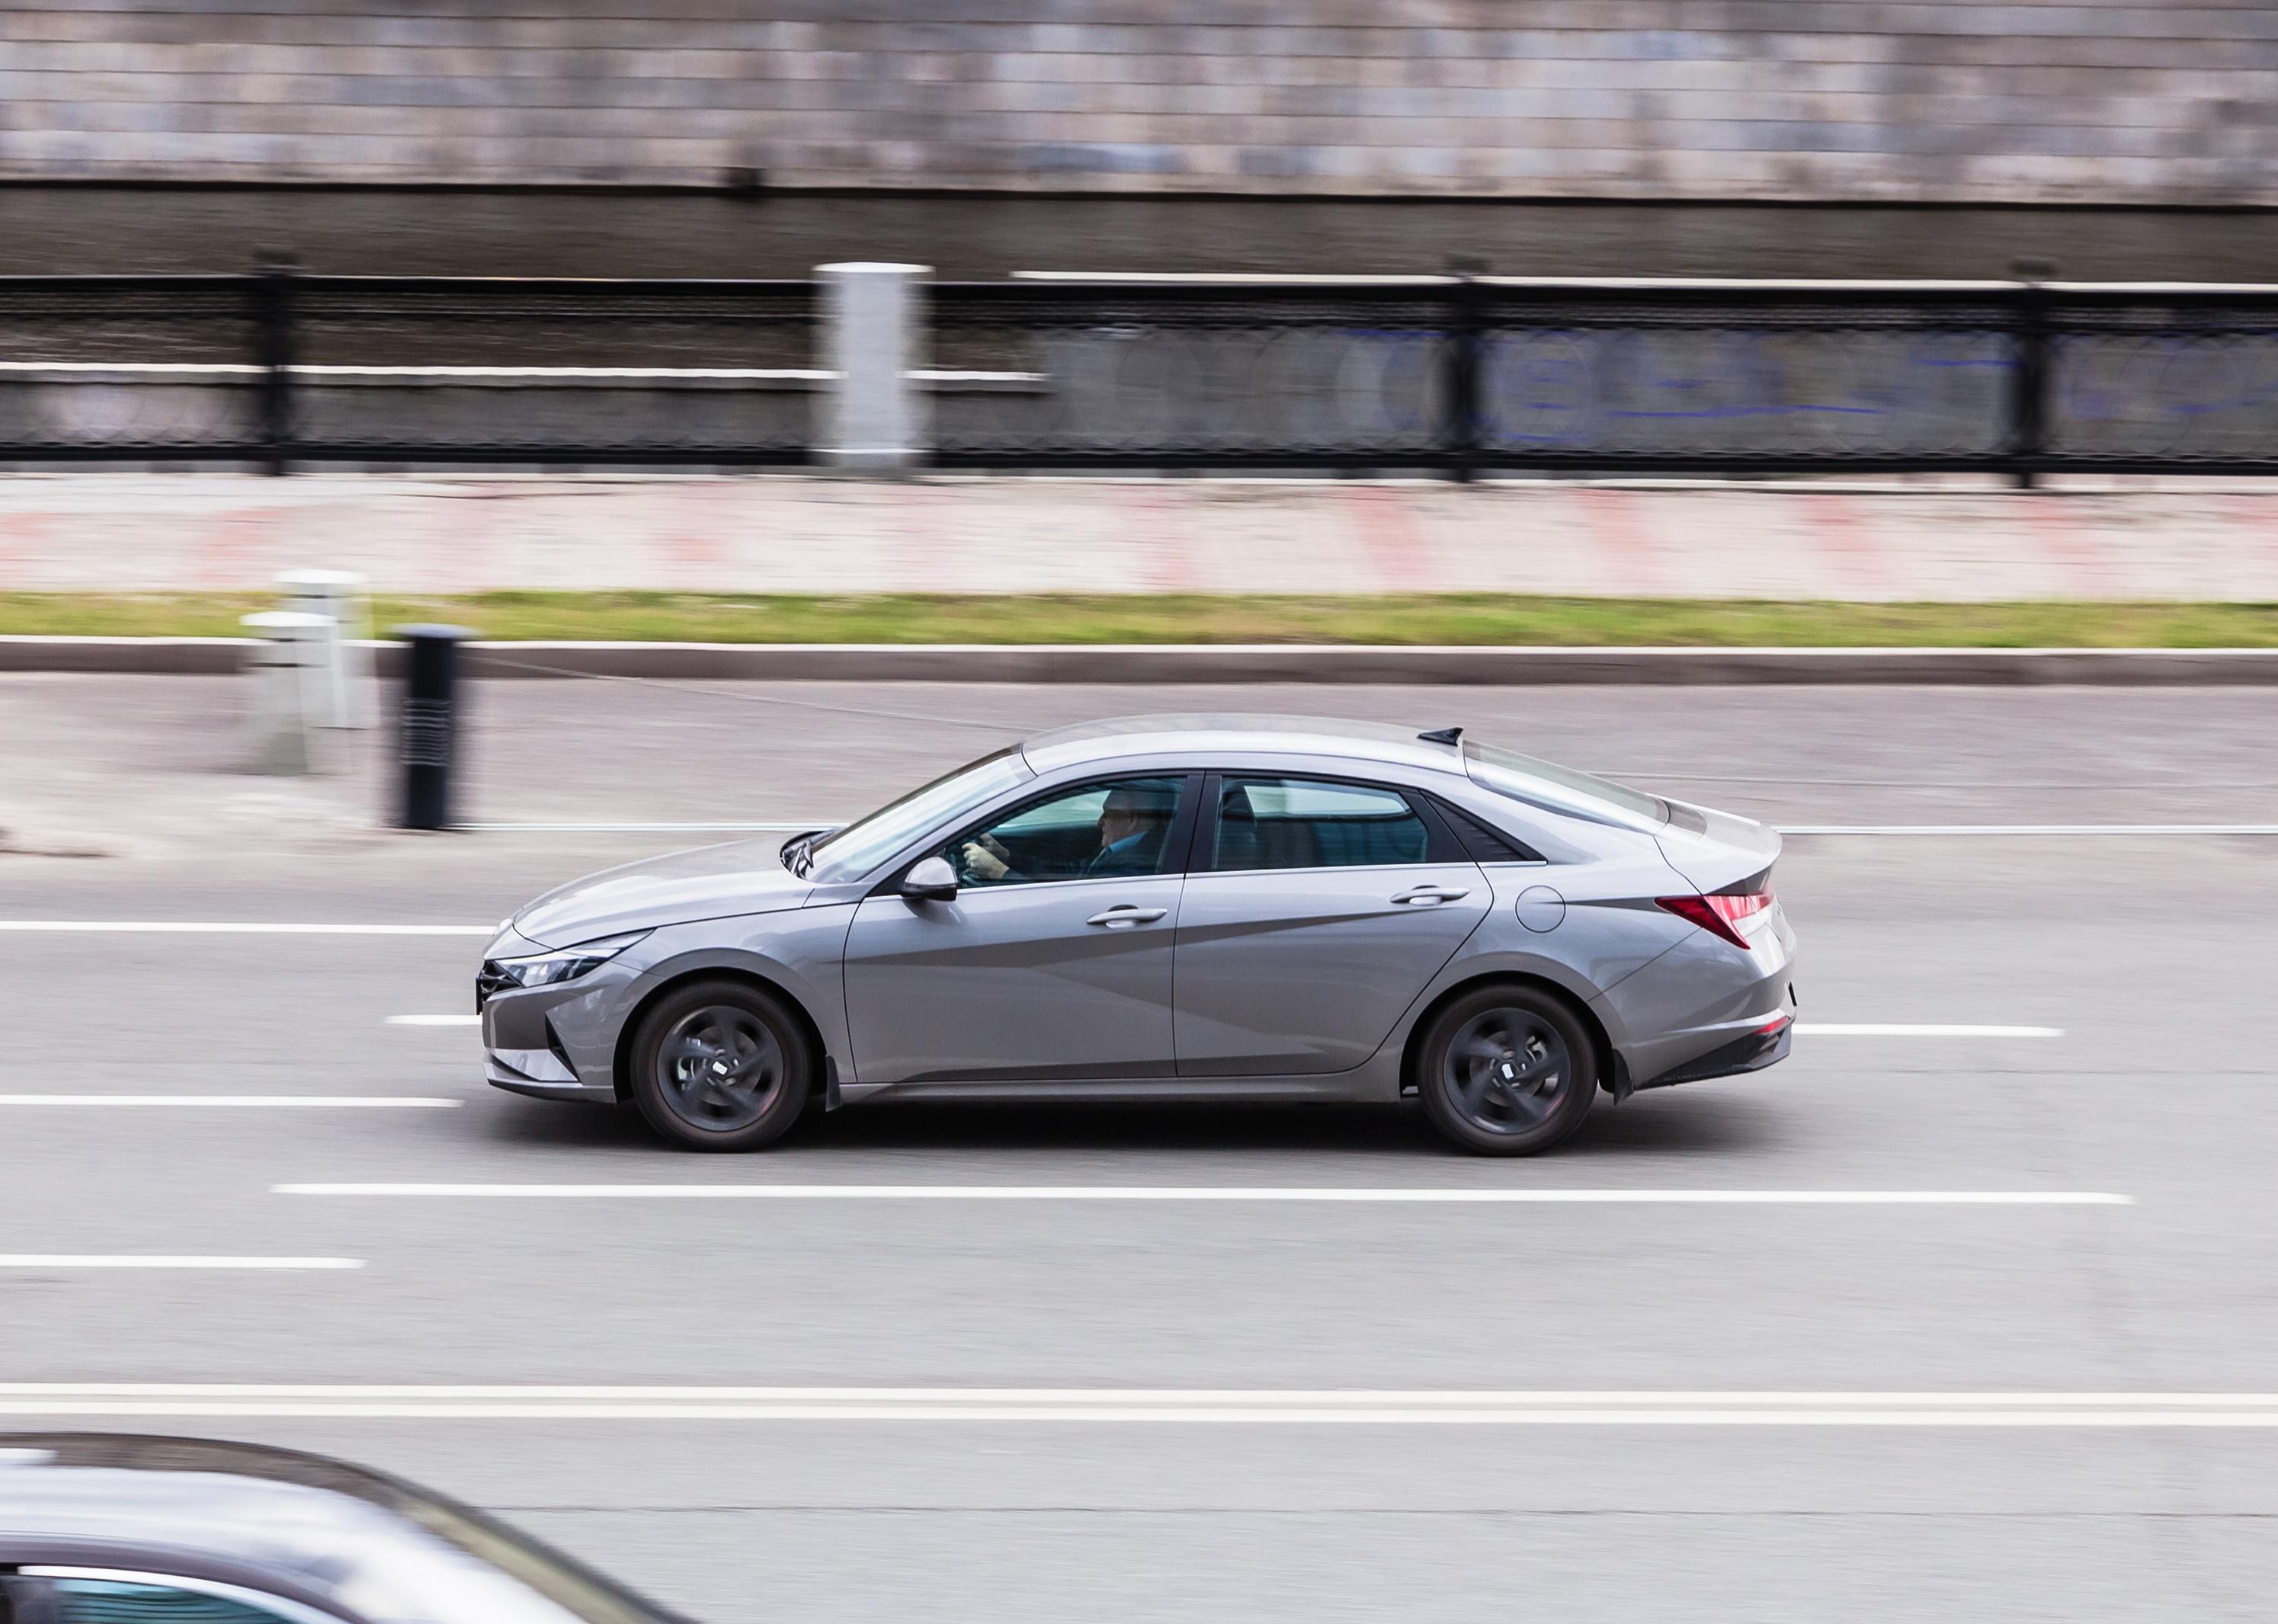 A silver Hyundai Elantra speeding down a road.